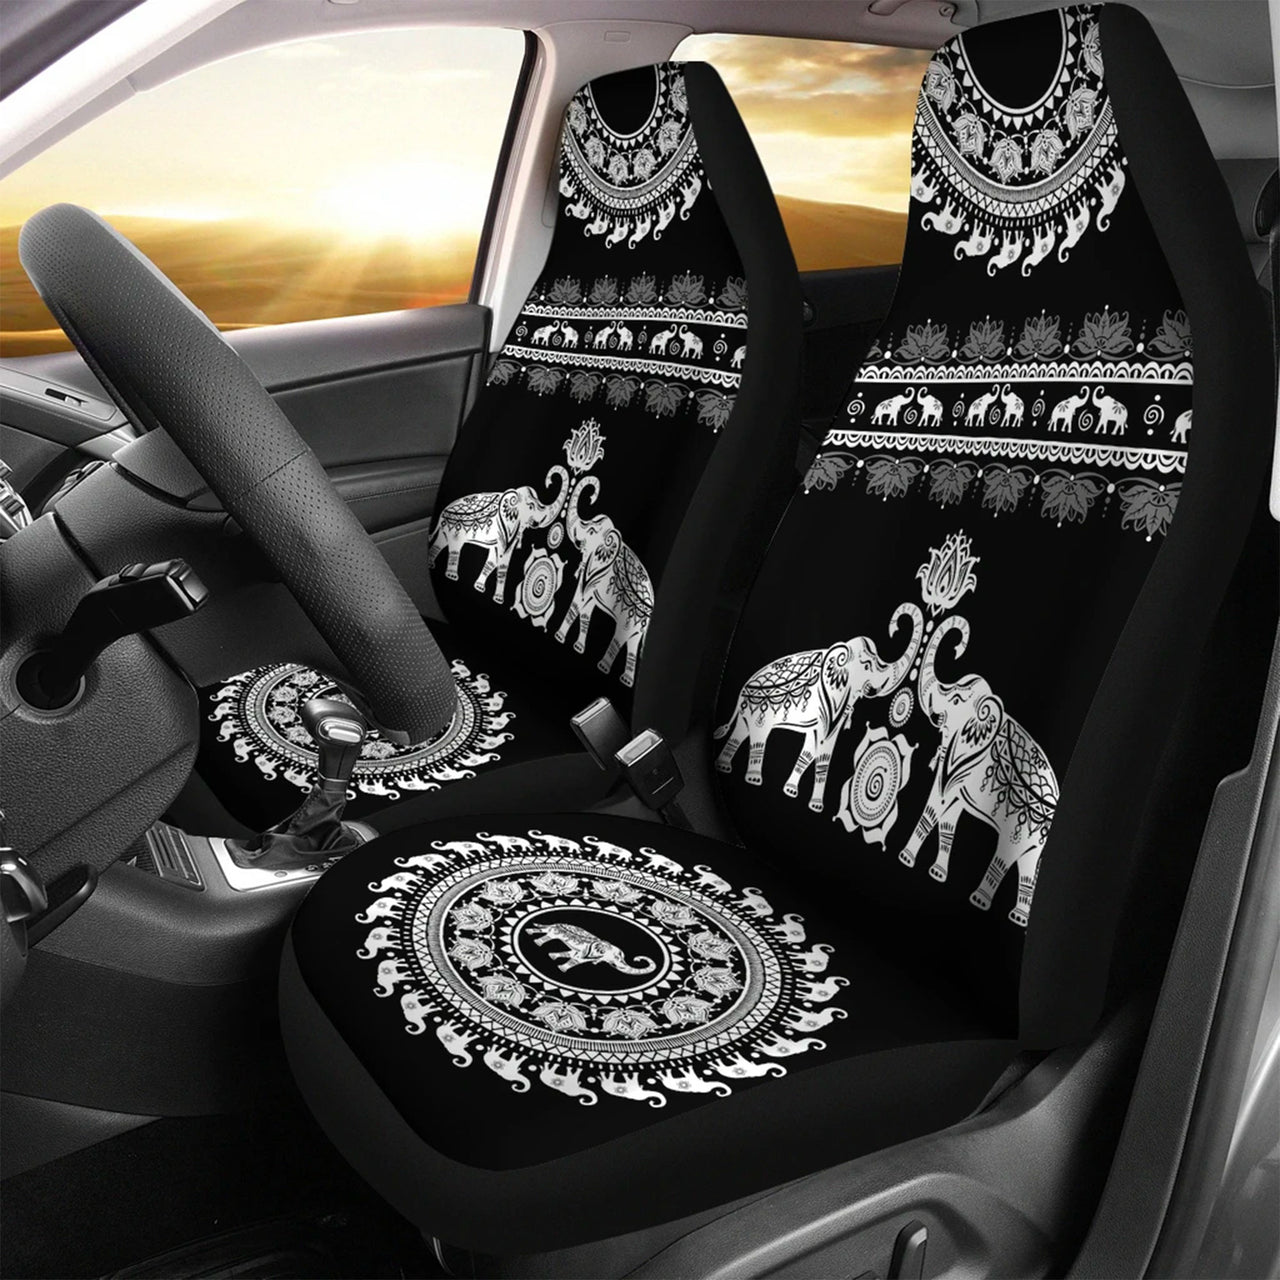 Custom Car Seat Cover Elephant Bohemian Vintage Mandala Patter Seat Covers for Cars